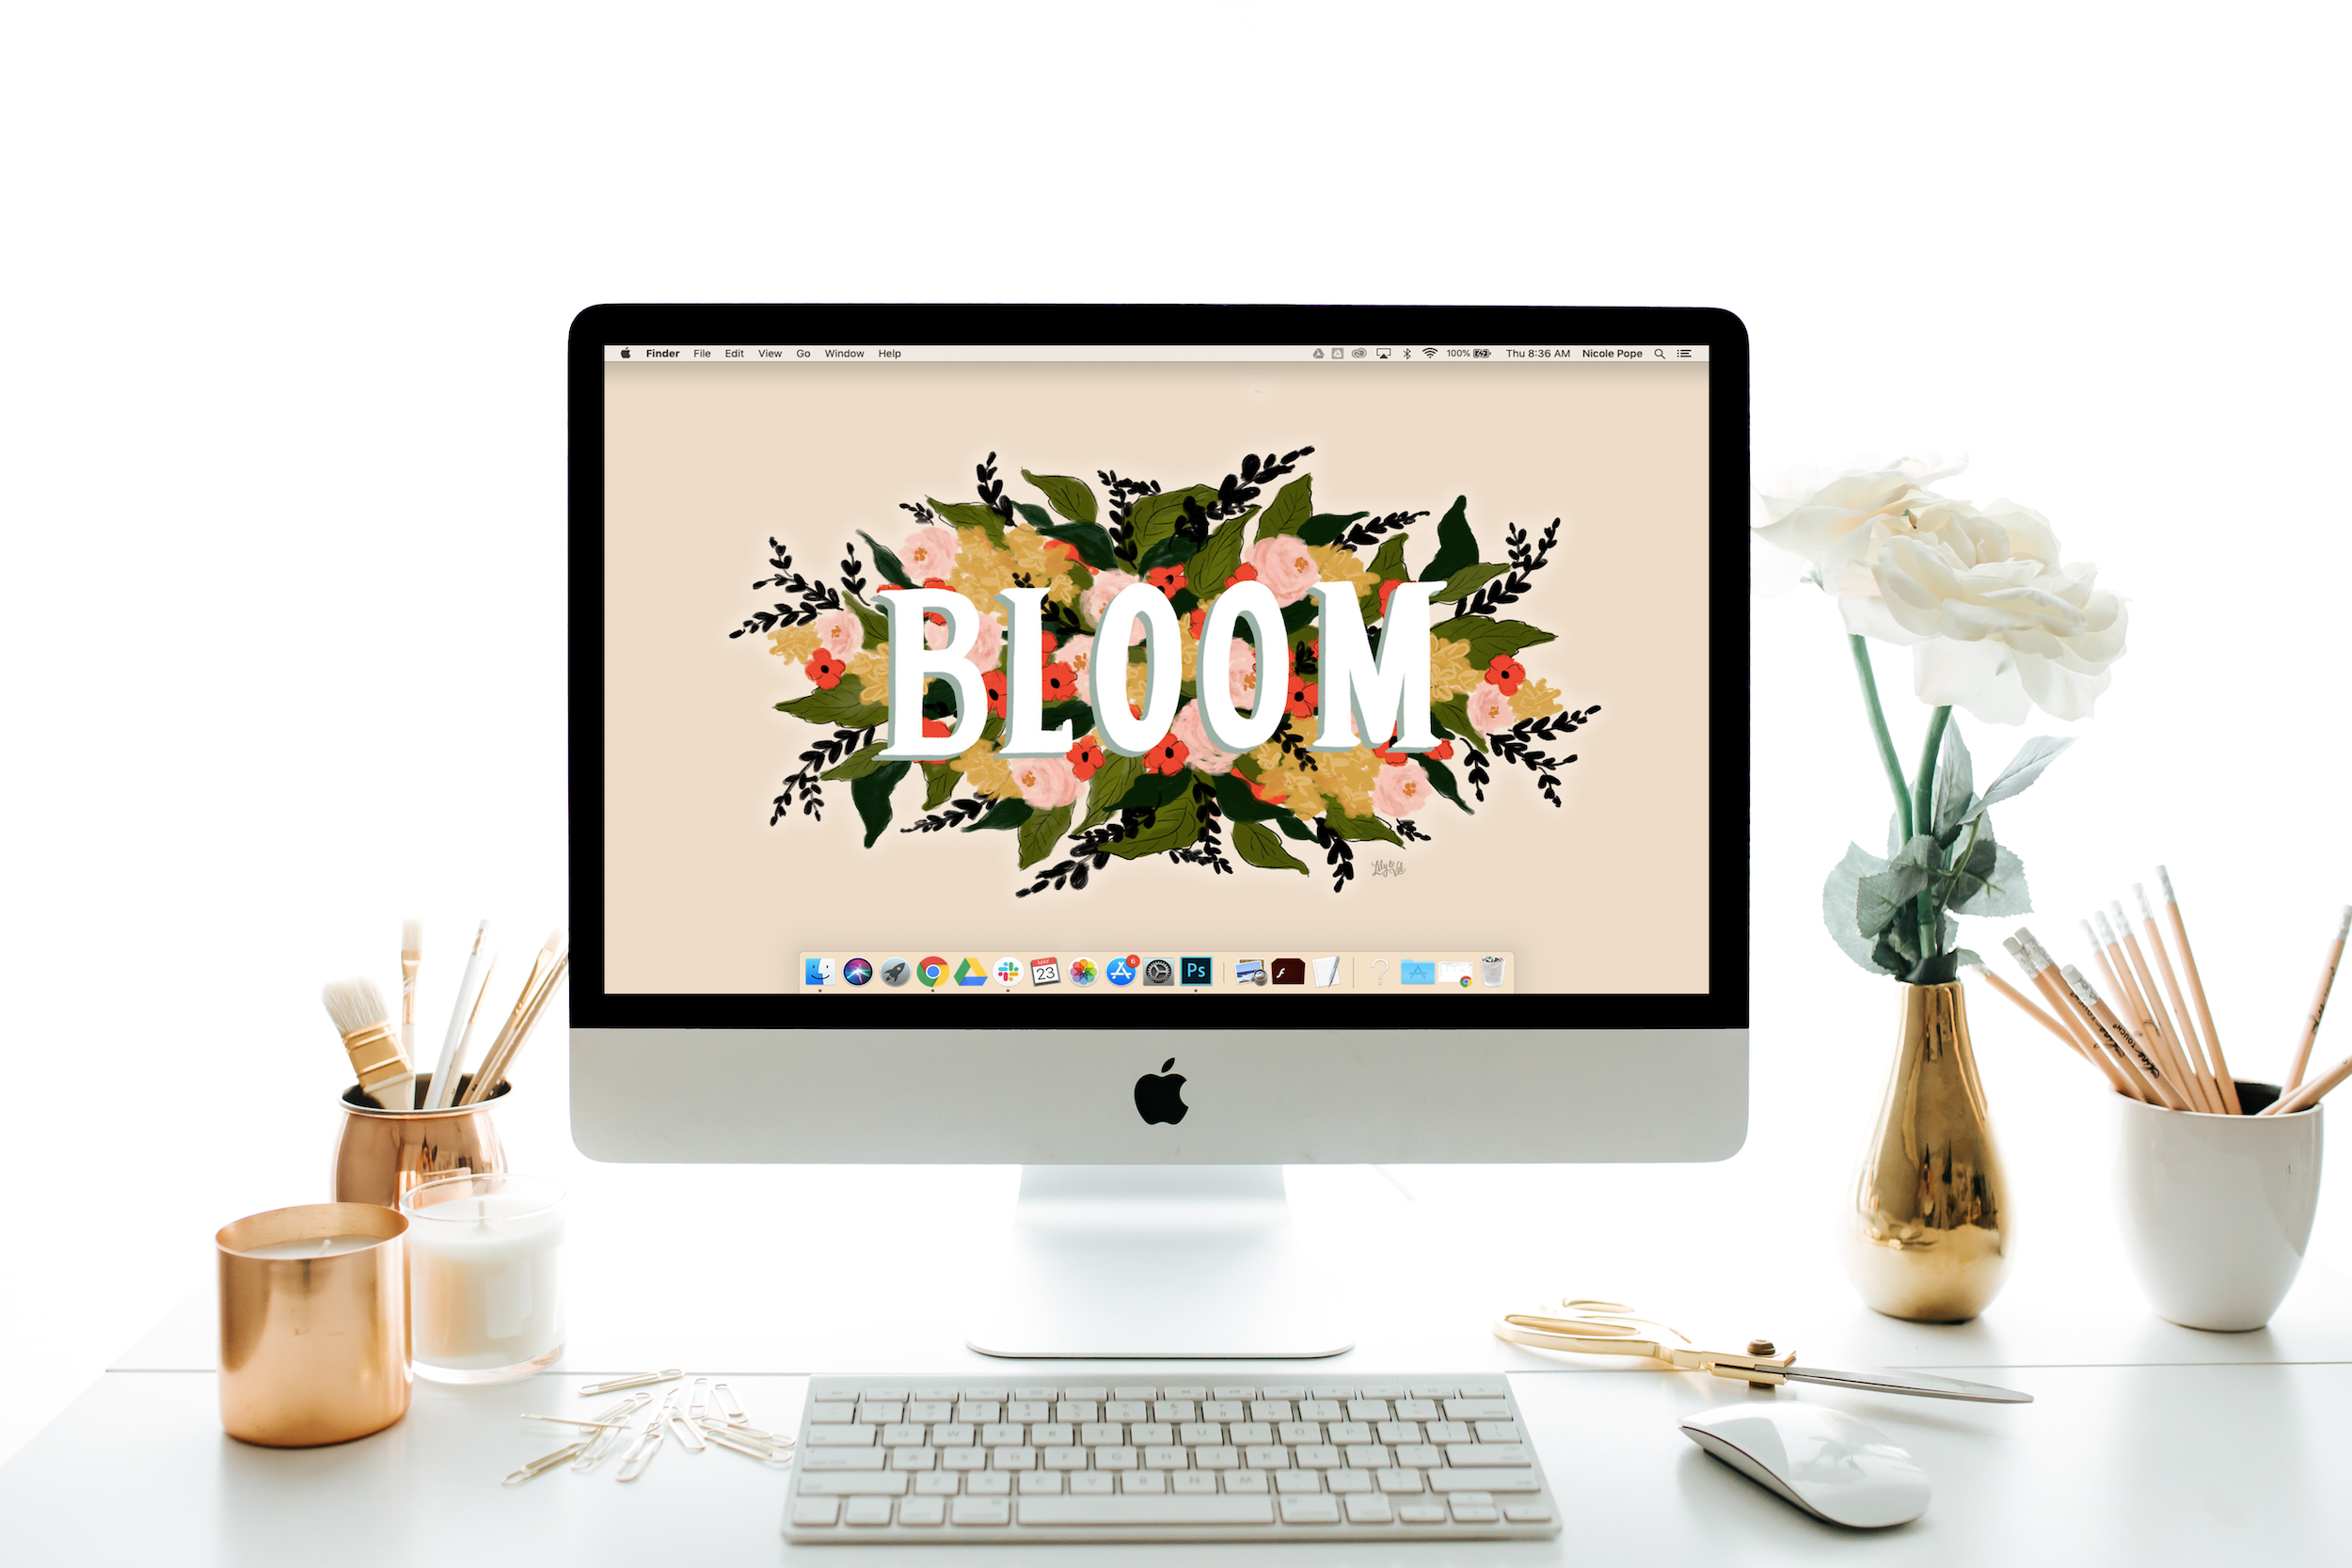 August's "Bloom" FREE Desktop Download